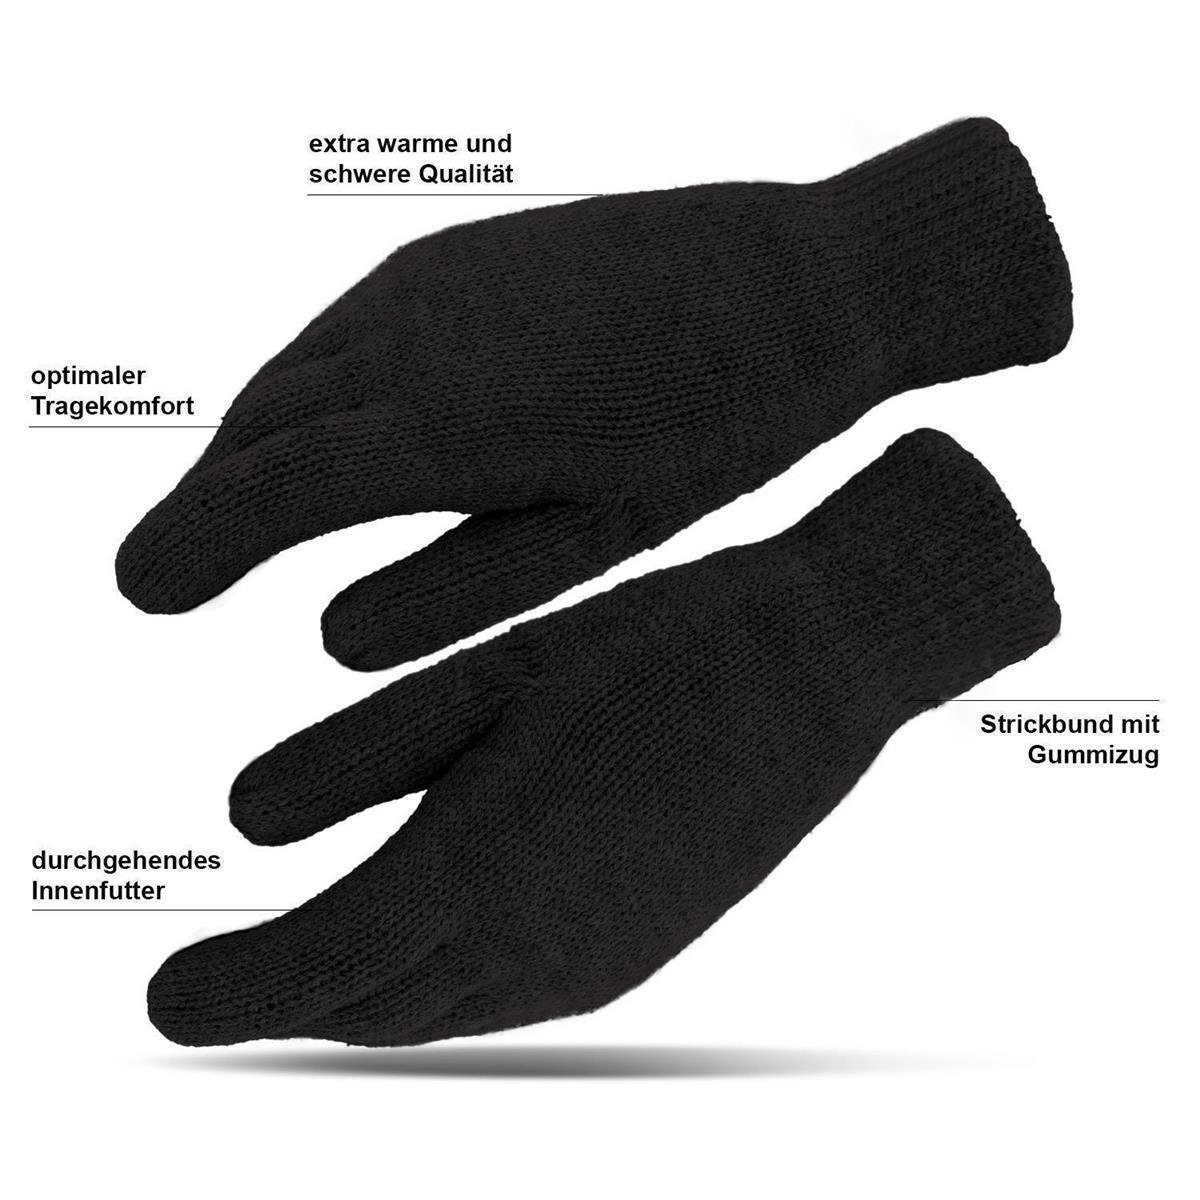 Tarjane Muster Strickhandschuhe 3M Handschuhe Unisex Anthrazit mit Thinsulate